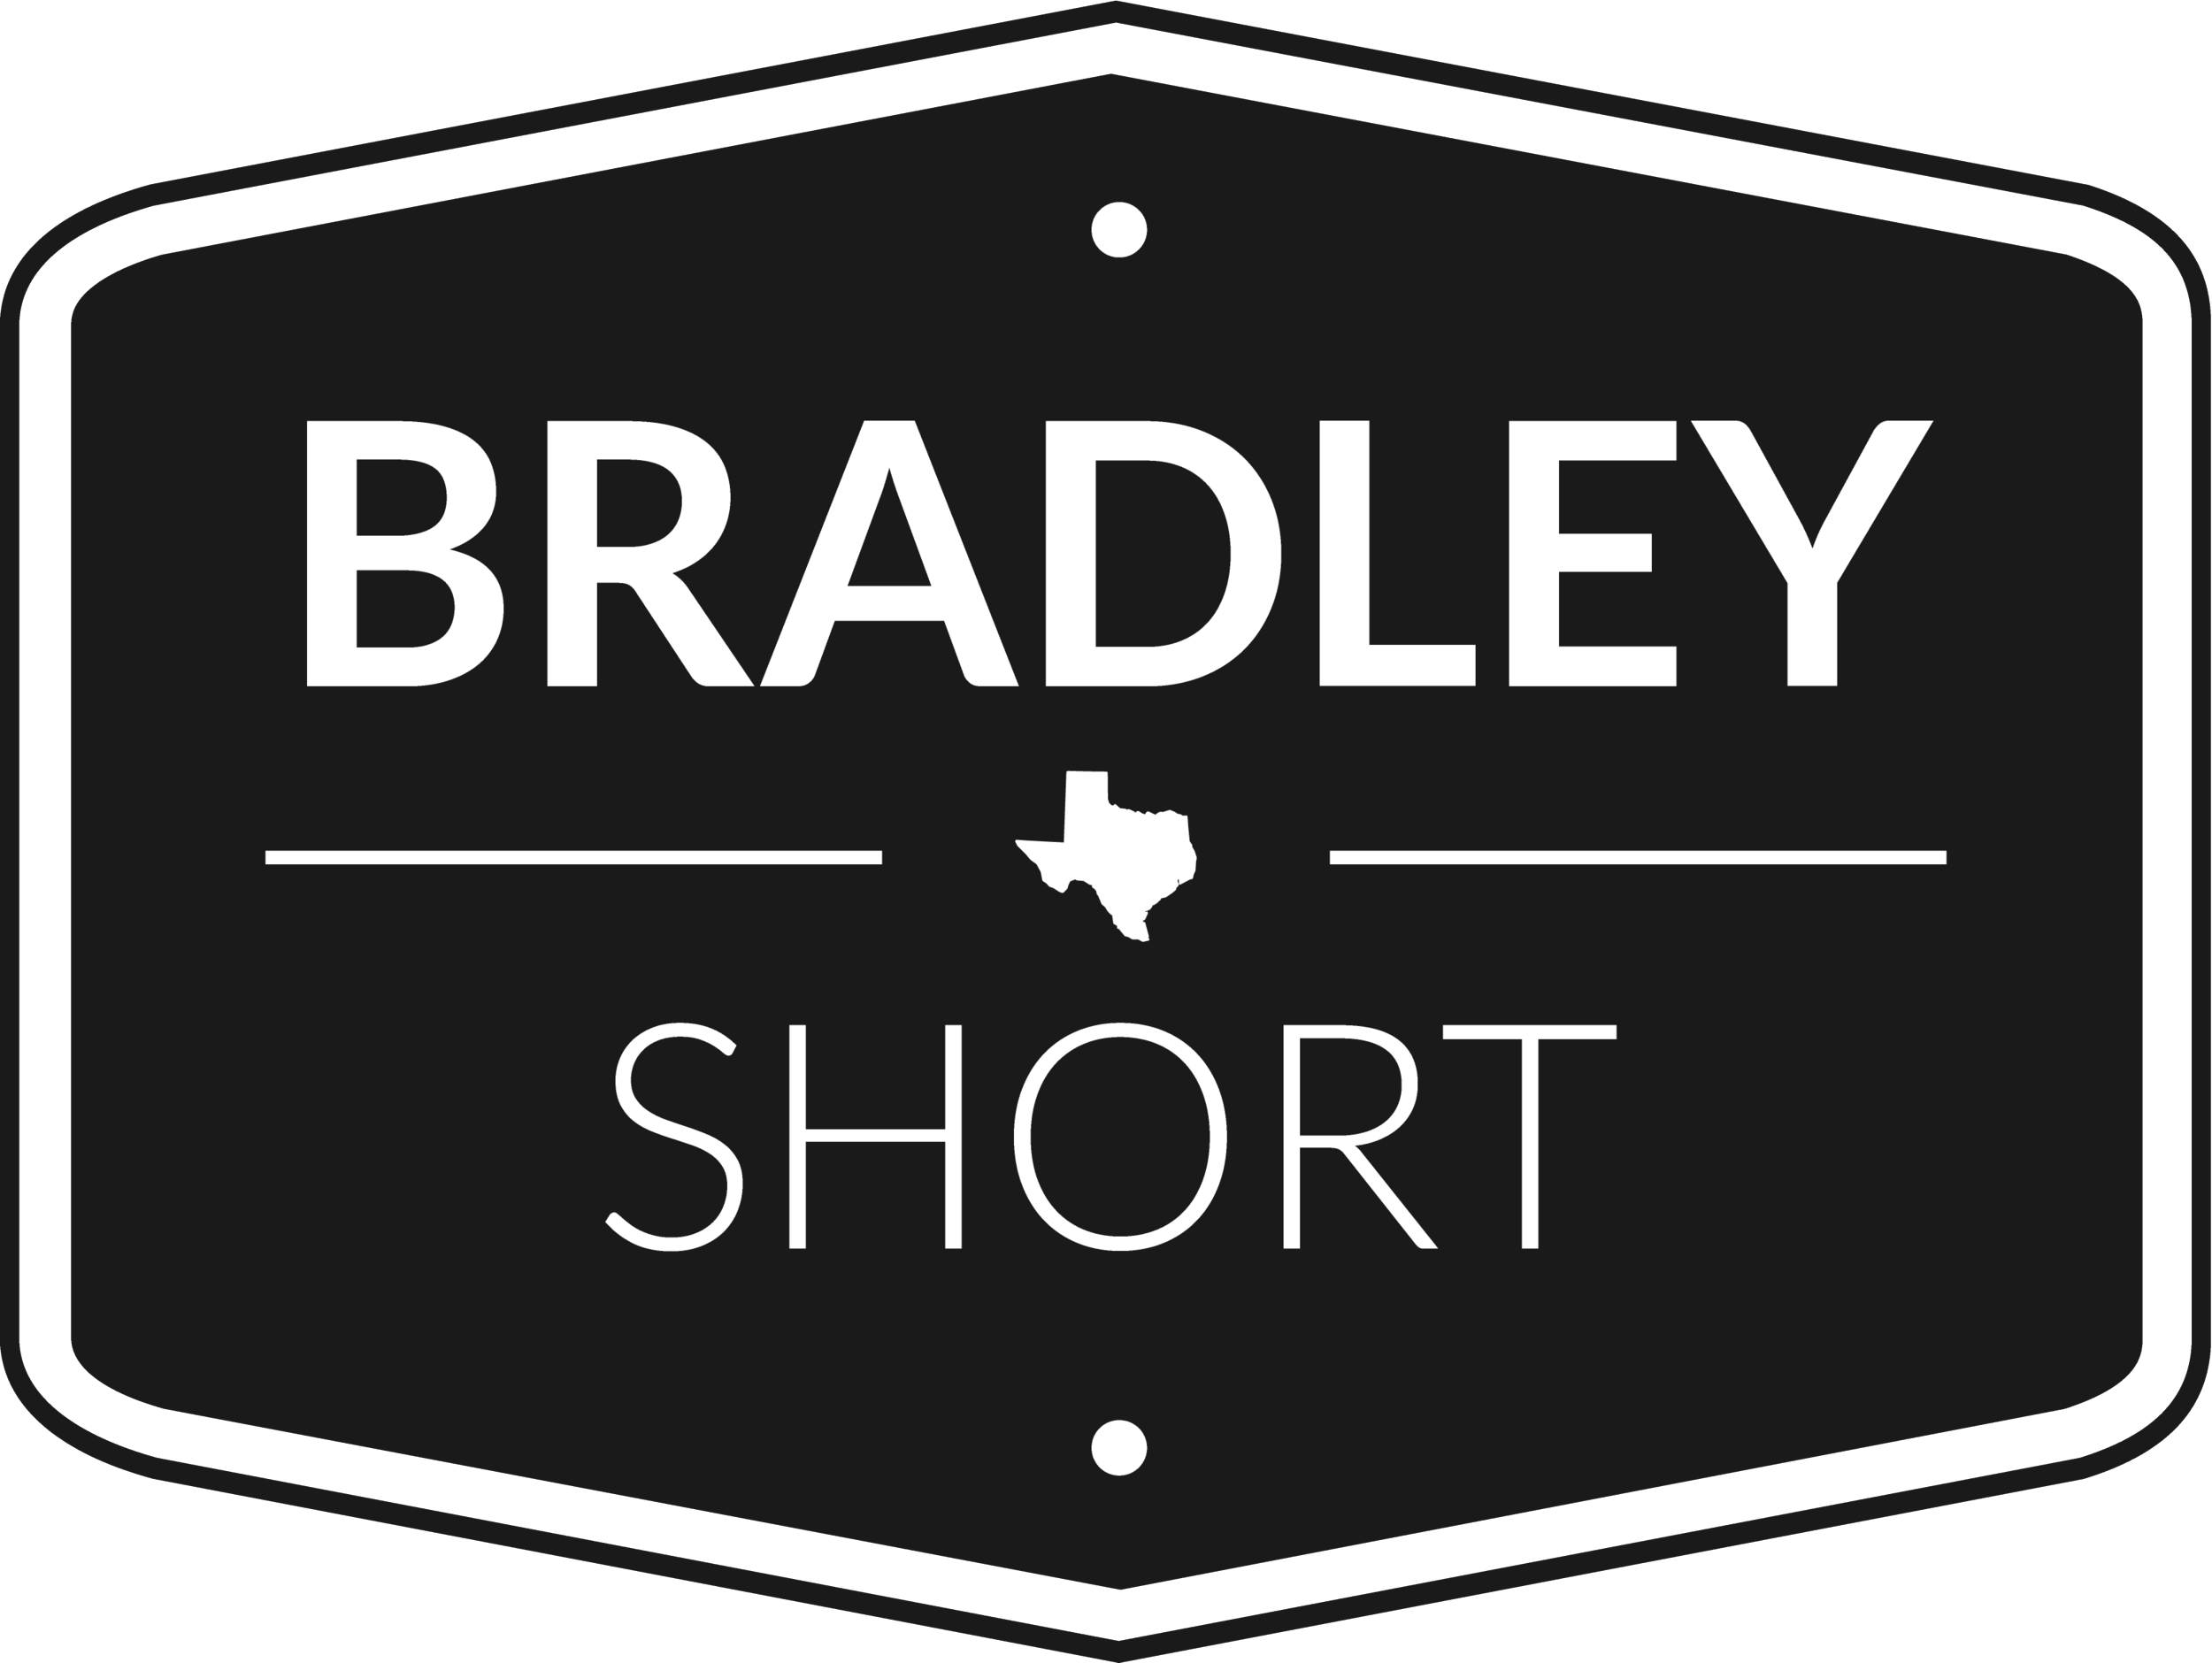 Bradley Short